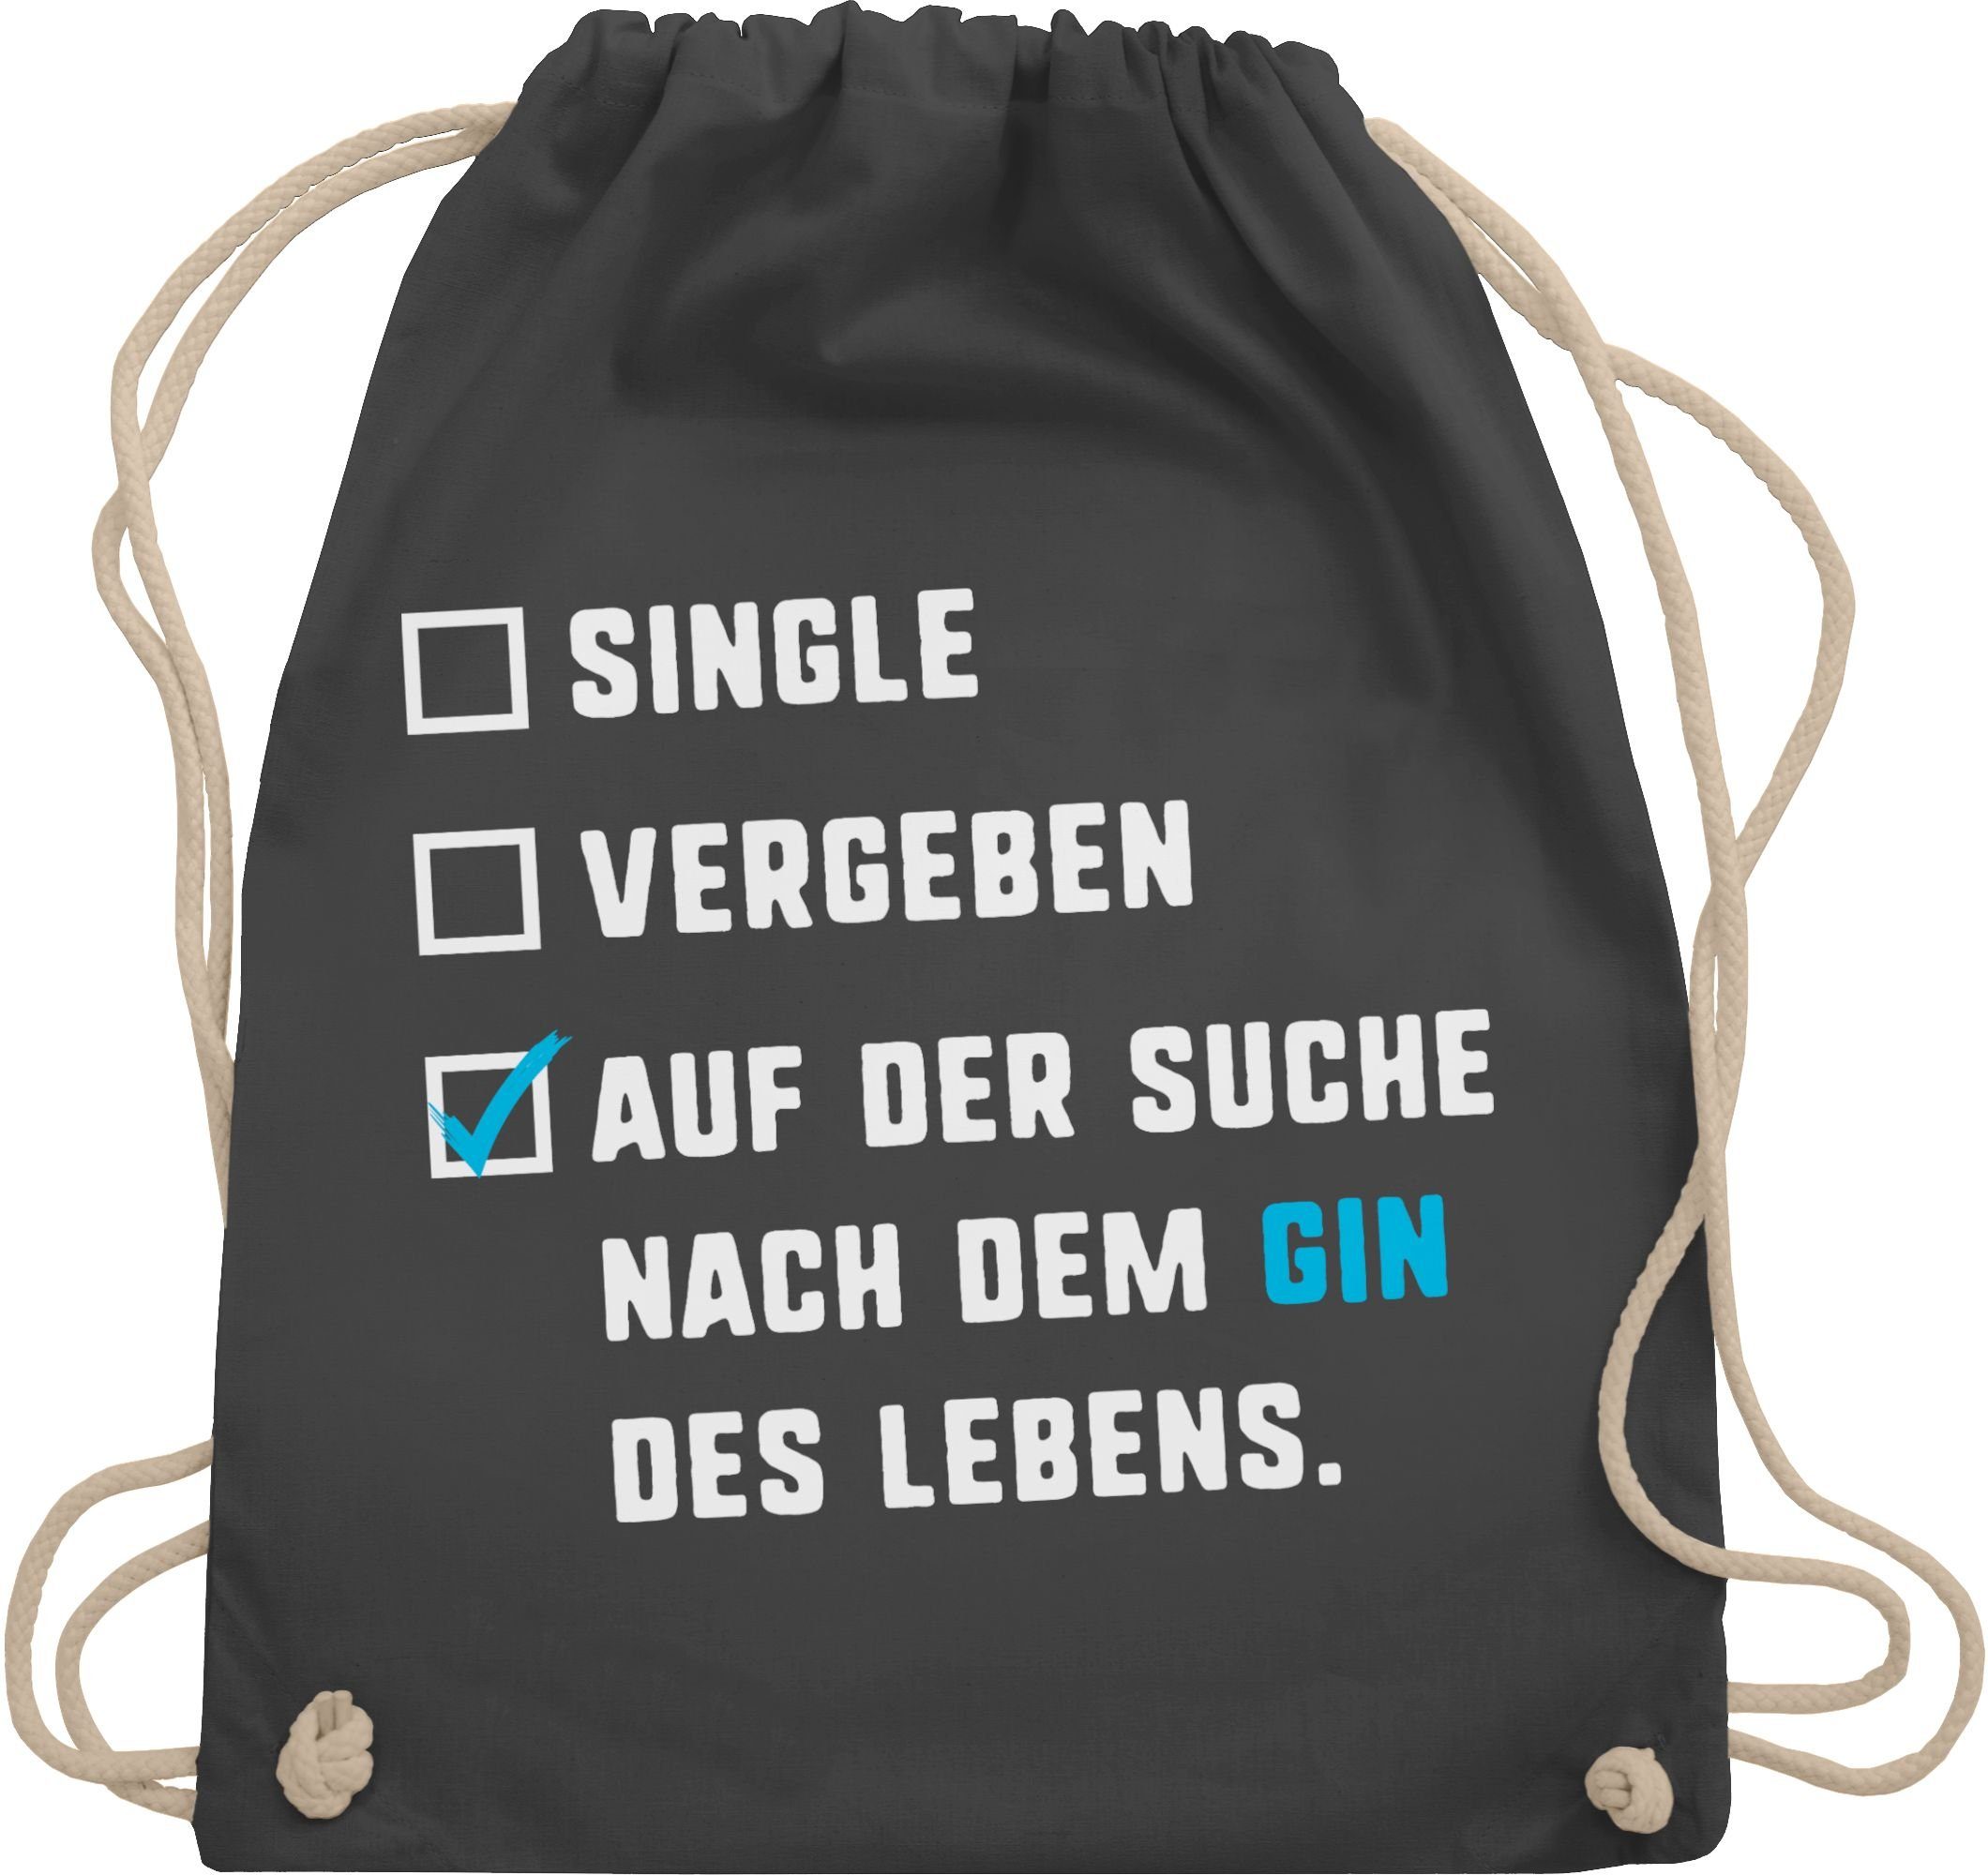 Shirtracer Turnbeutel Single Vergeben Gin des Lebens, Stoffbeutel Festival Outfit